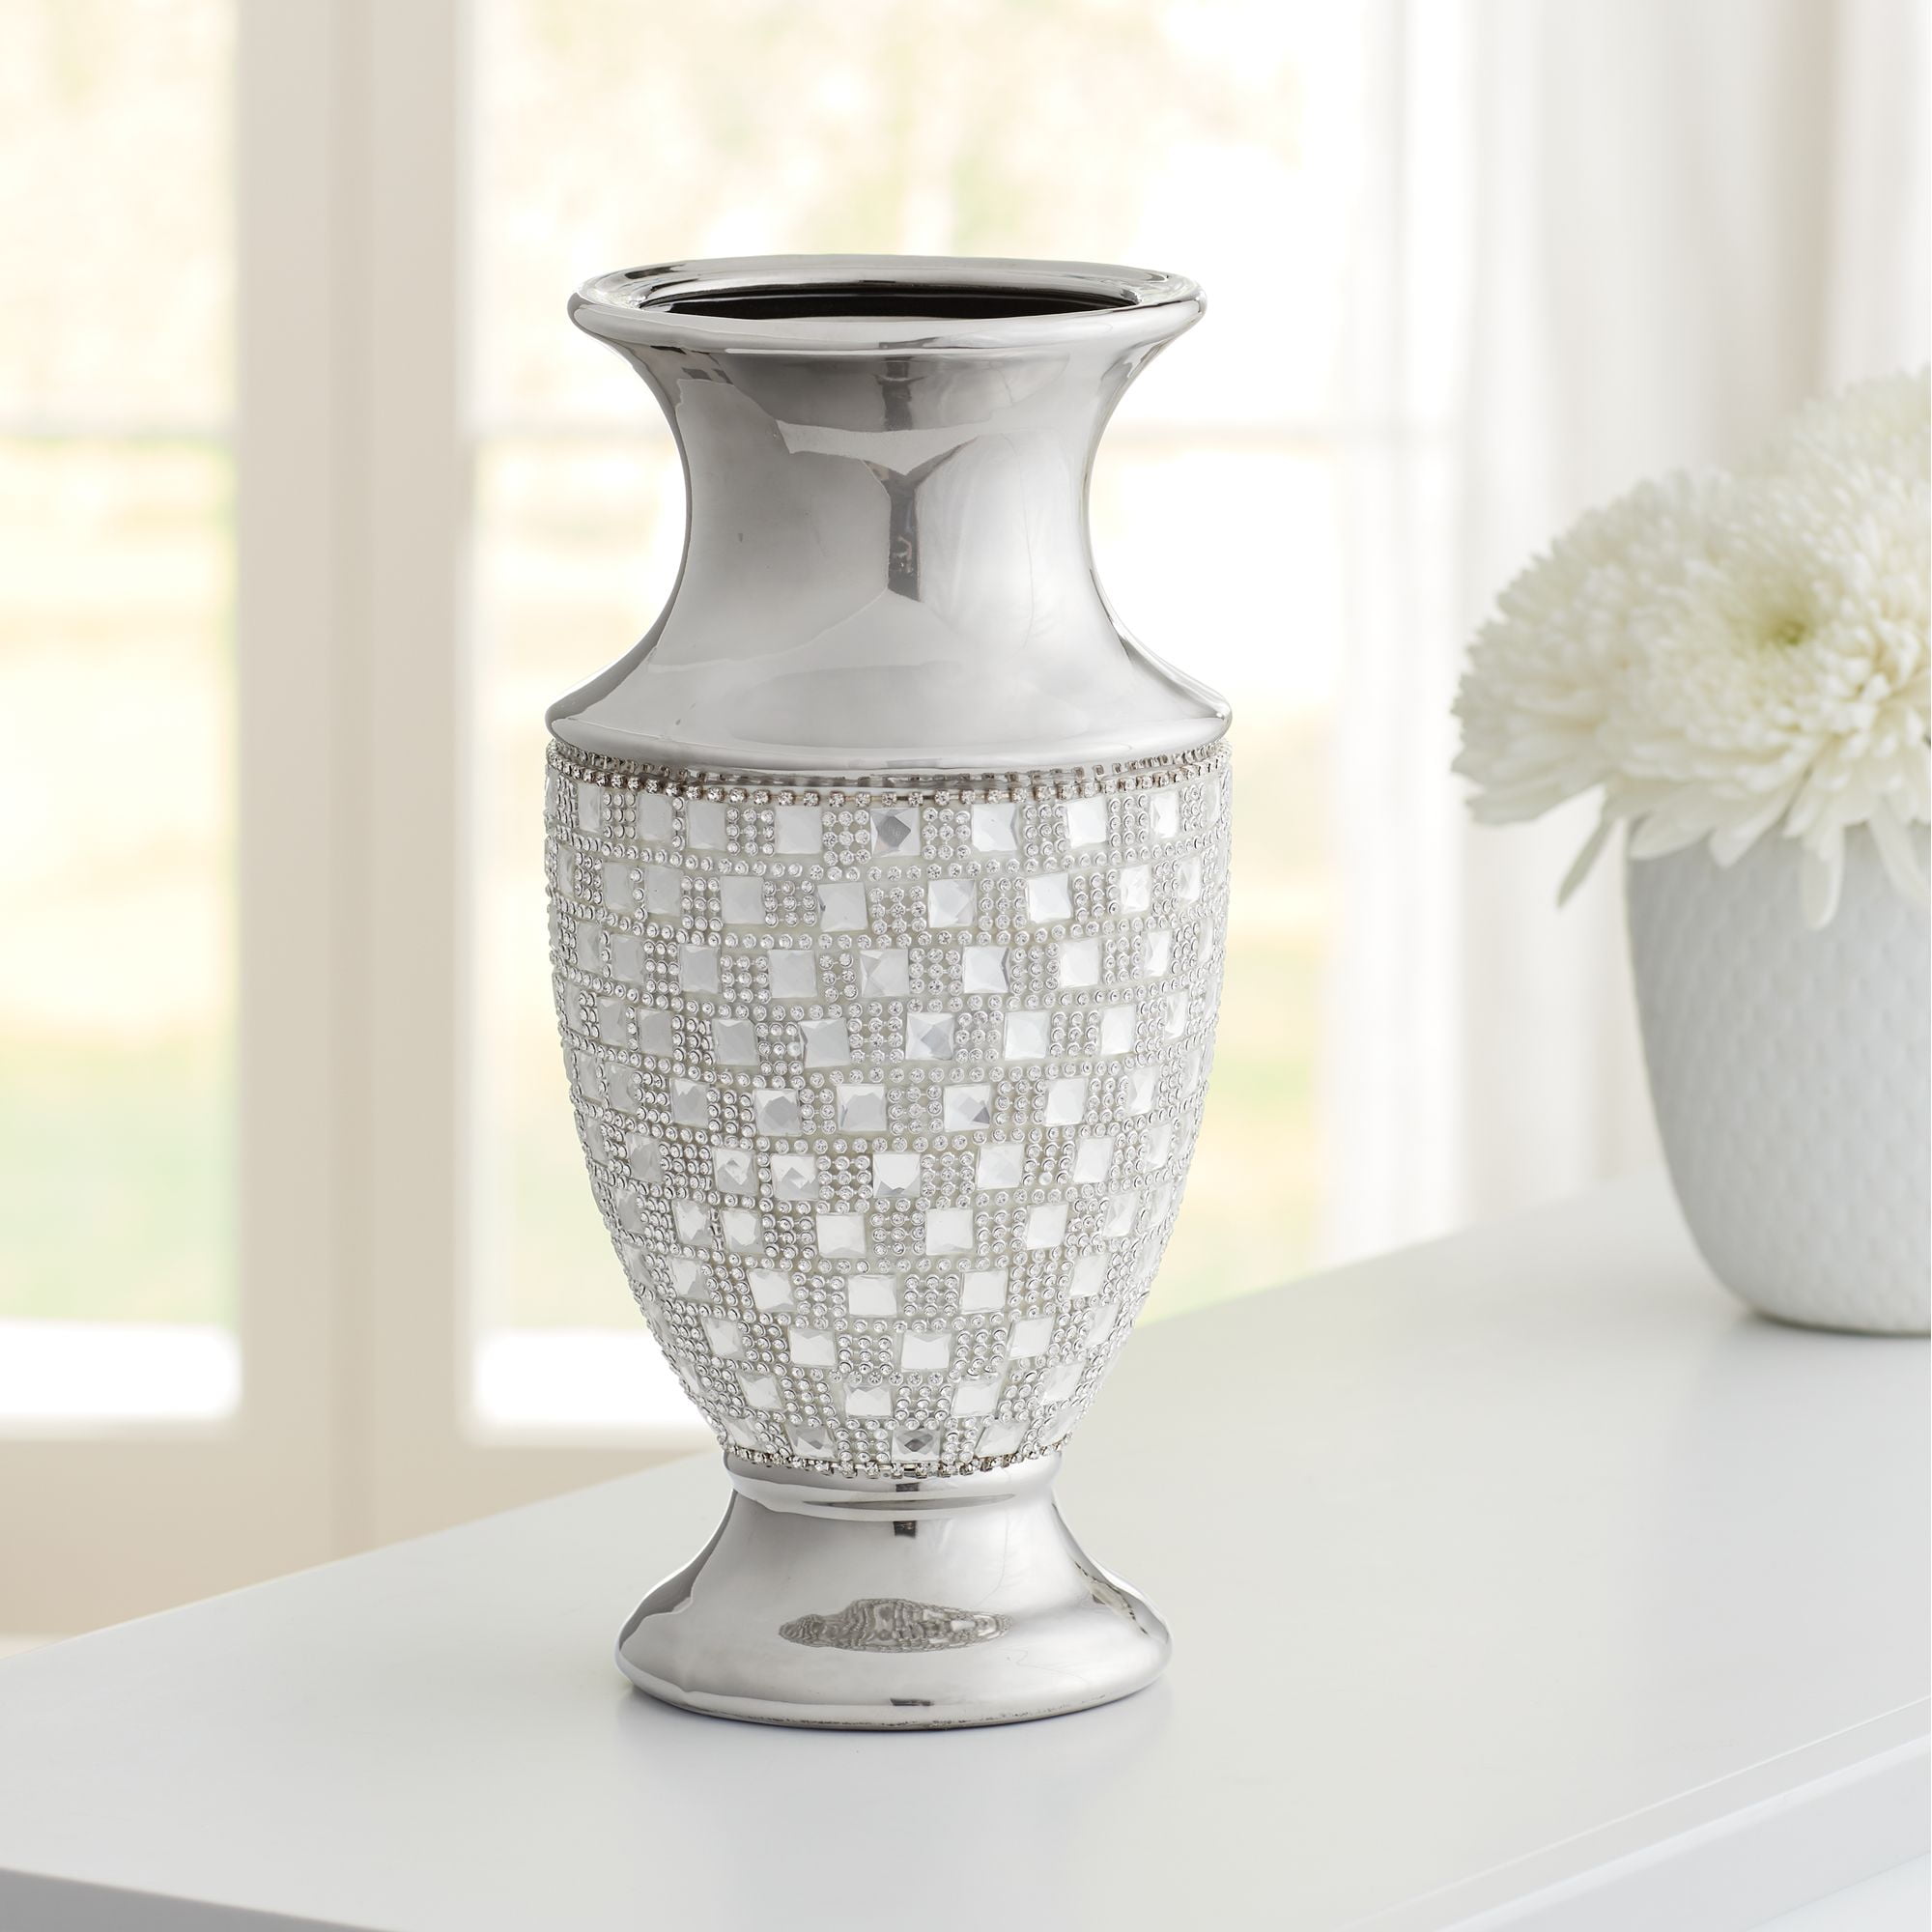 Red 9.5 x 9.5 x 10 Inches Sagebrook Home 12068-29 Decorative Ceramic Spike Vase